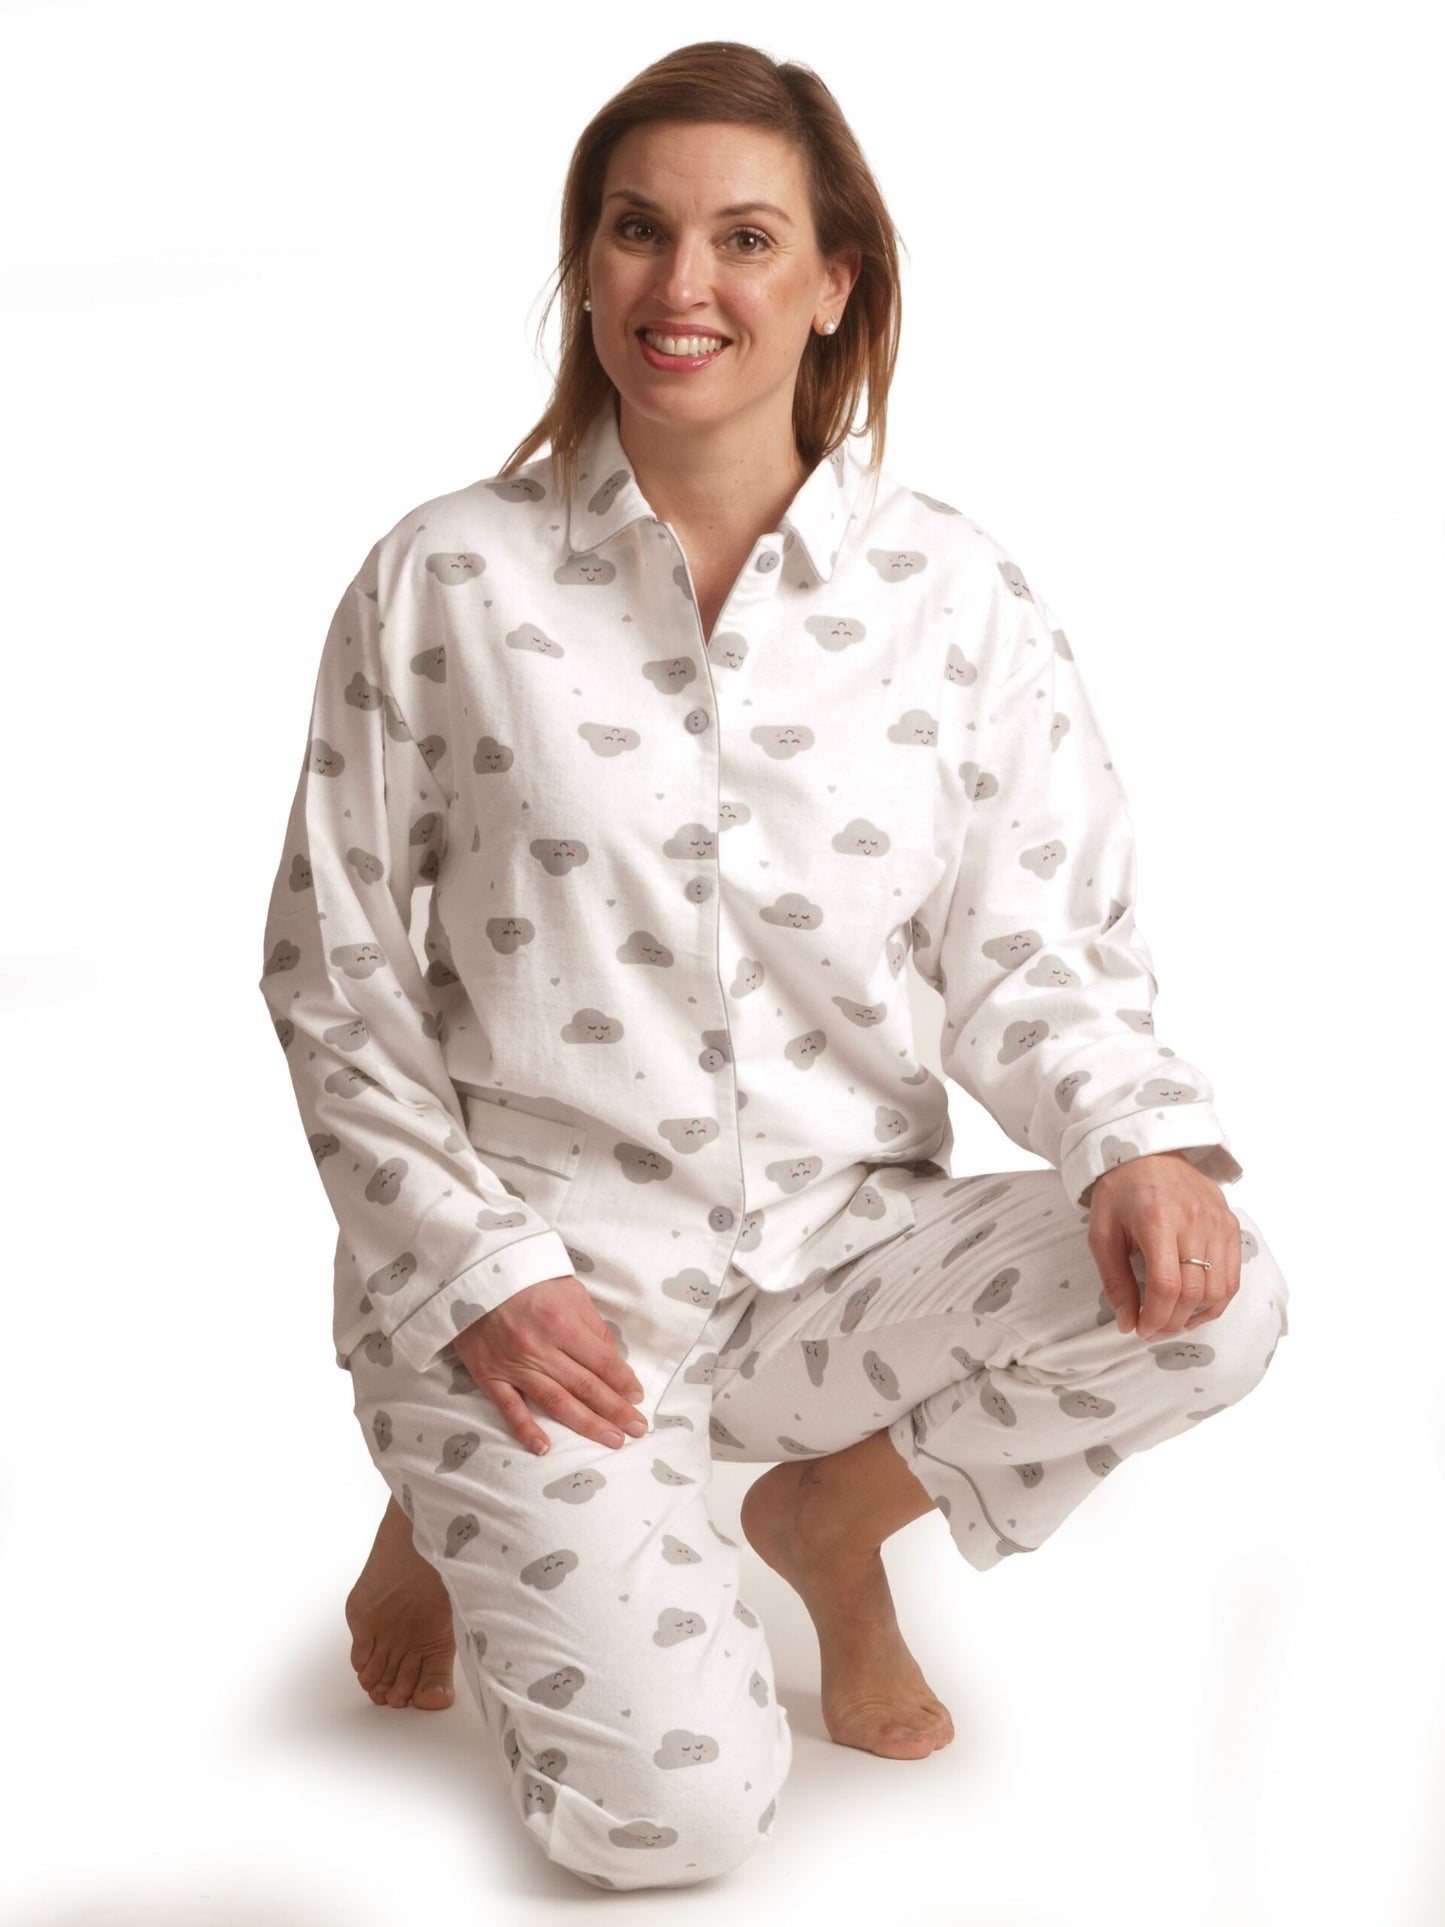 Cocodream pyjama dames flanel